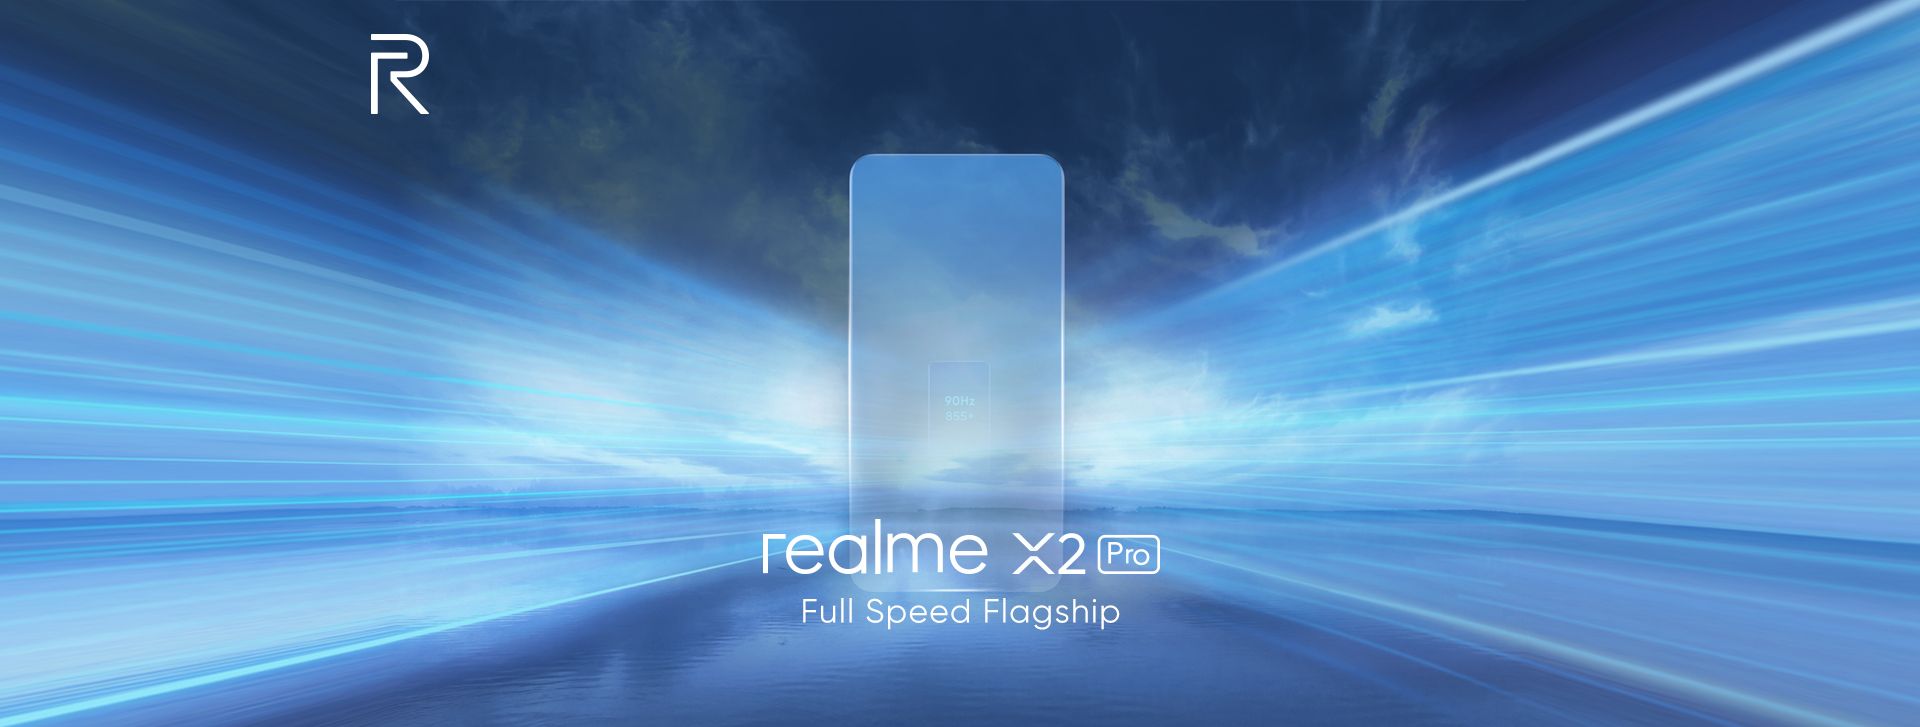 realme X2 Pro อาจมาพร้อมชิป Snapdragon 855+, หน้าจอ 90 Hz และซูมไฮบริด 20x คาดเปิดตัวเร็วๆ นี้